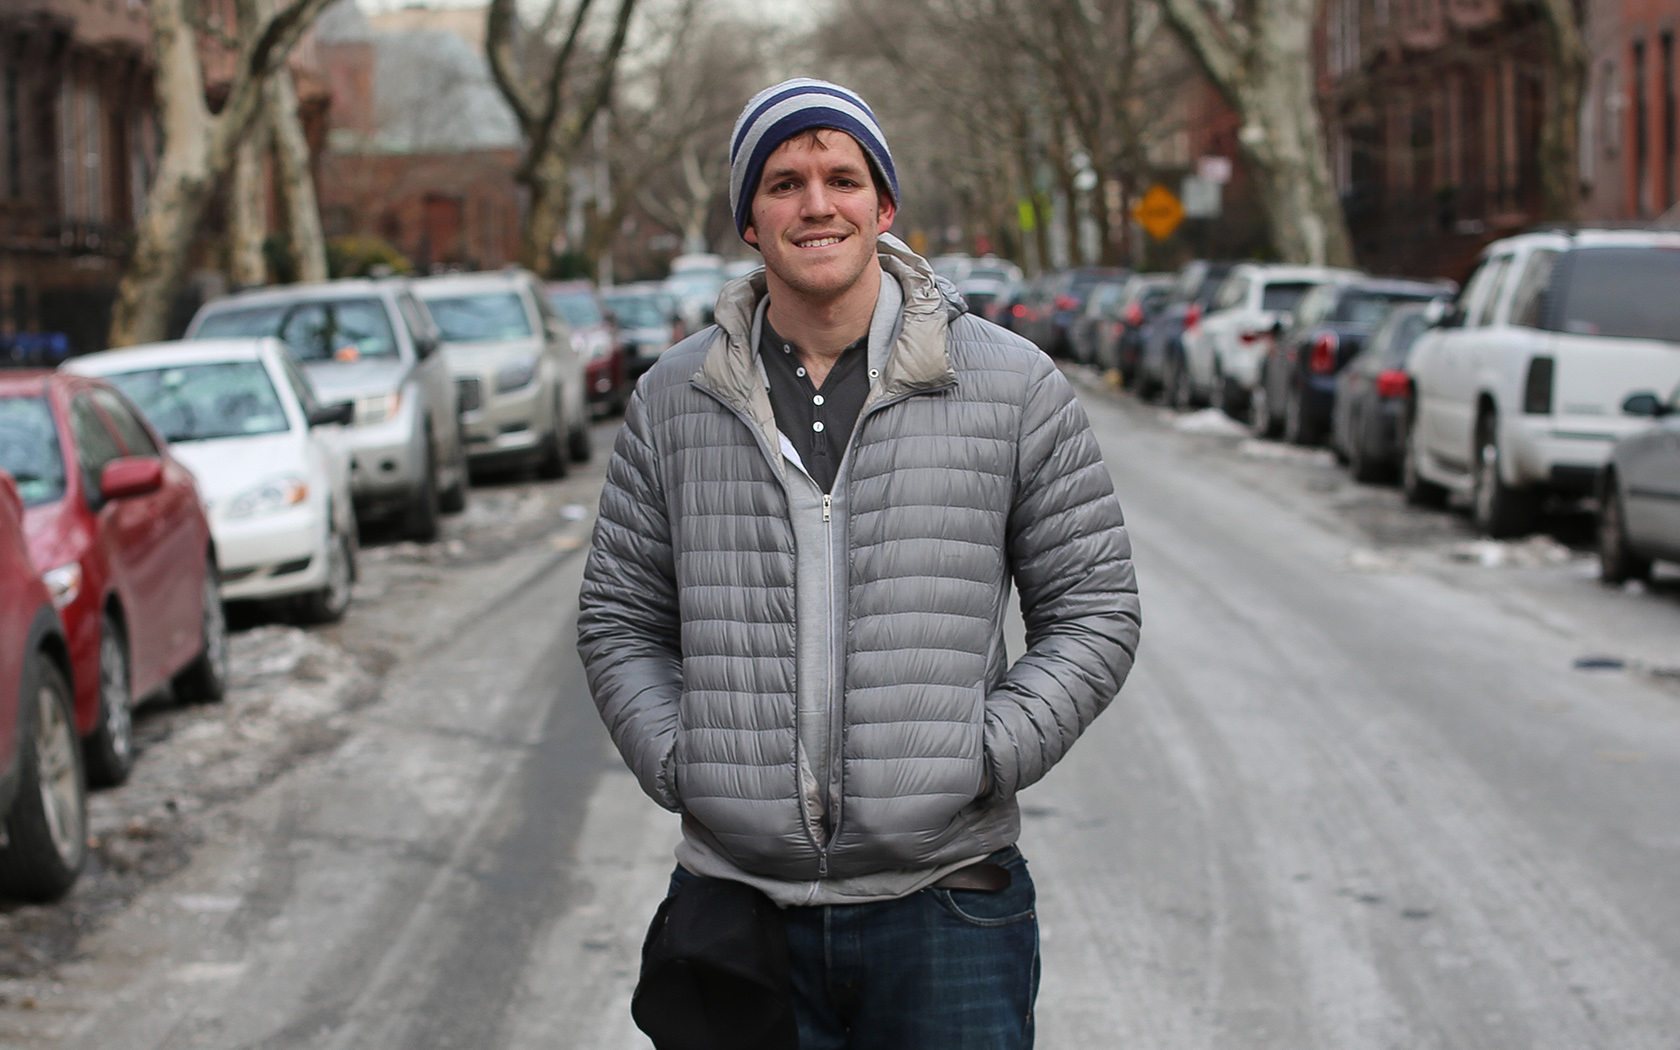 Brandon Stanton, creator of Humans of New York